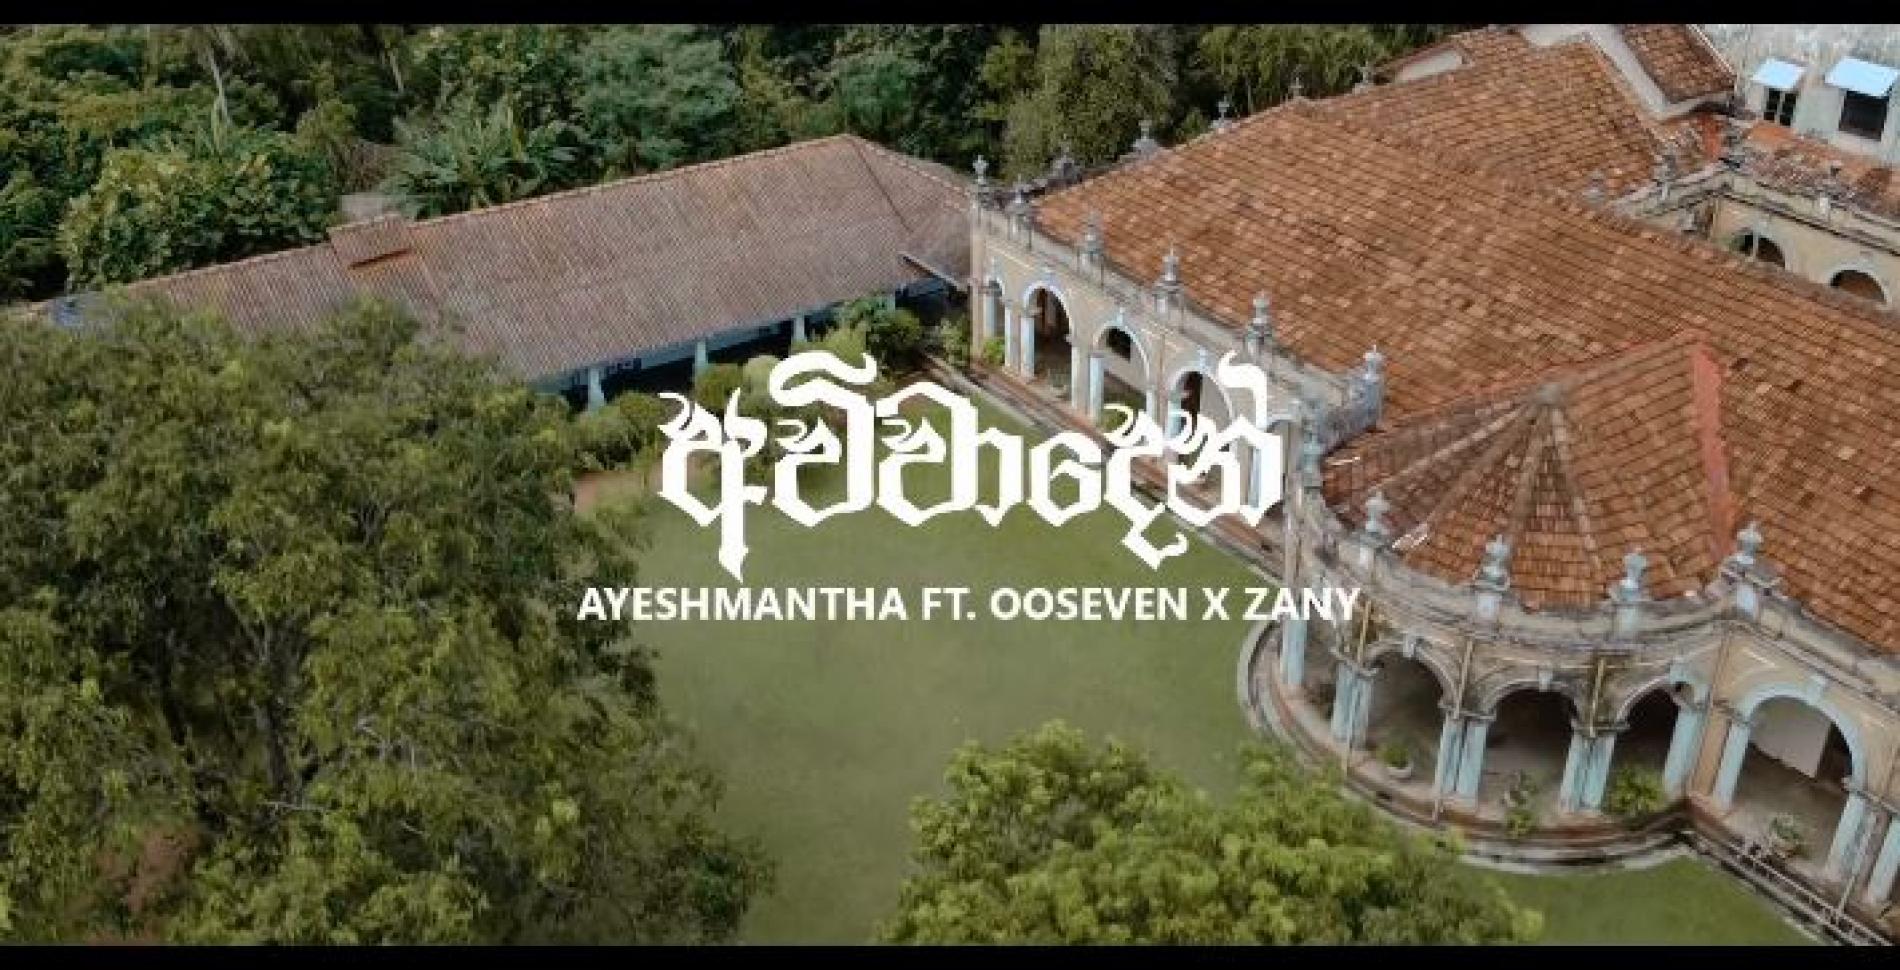 New Music : Ayeshmantha – Avivaaden (අවිවාදෙන්) ft OO Seven & Zany (Official Music Video)